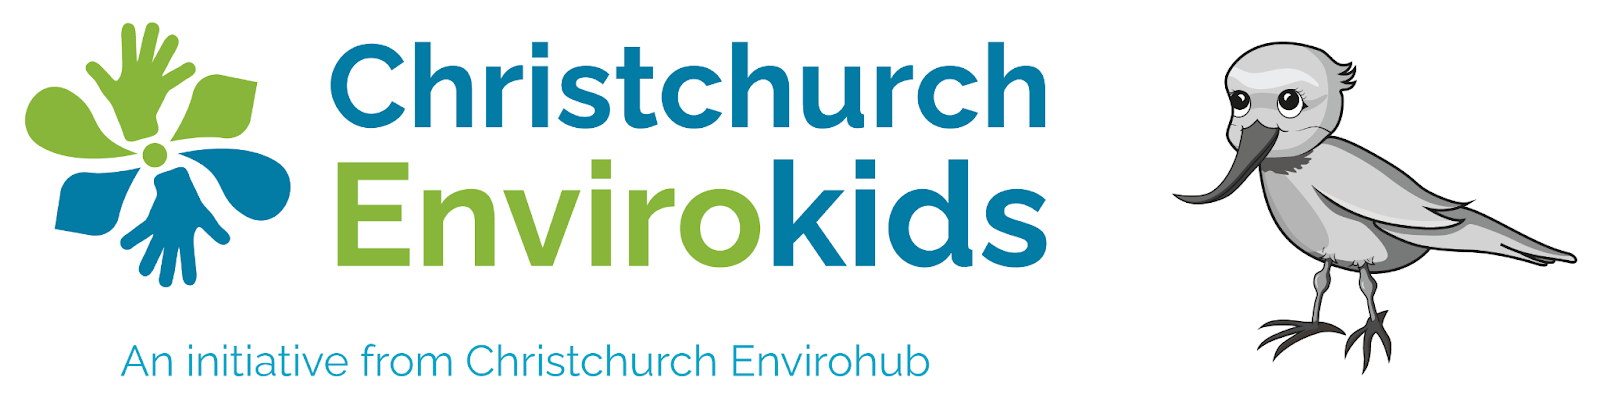 Logo of Christchurch Envirokids, An initiative from Christchurch Envirohub